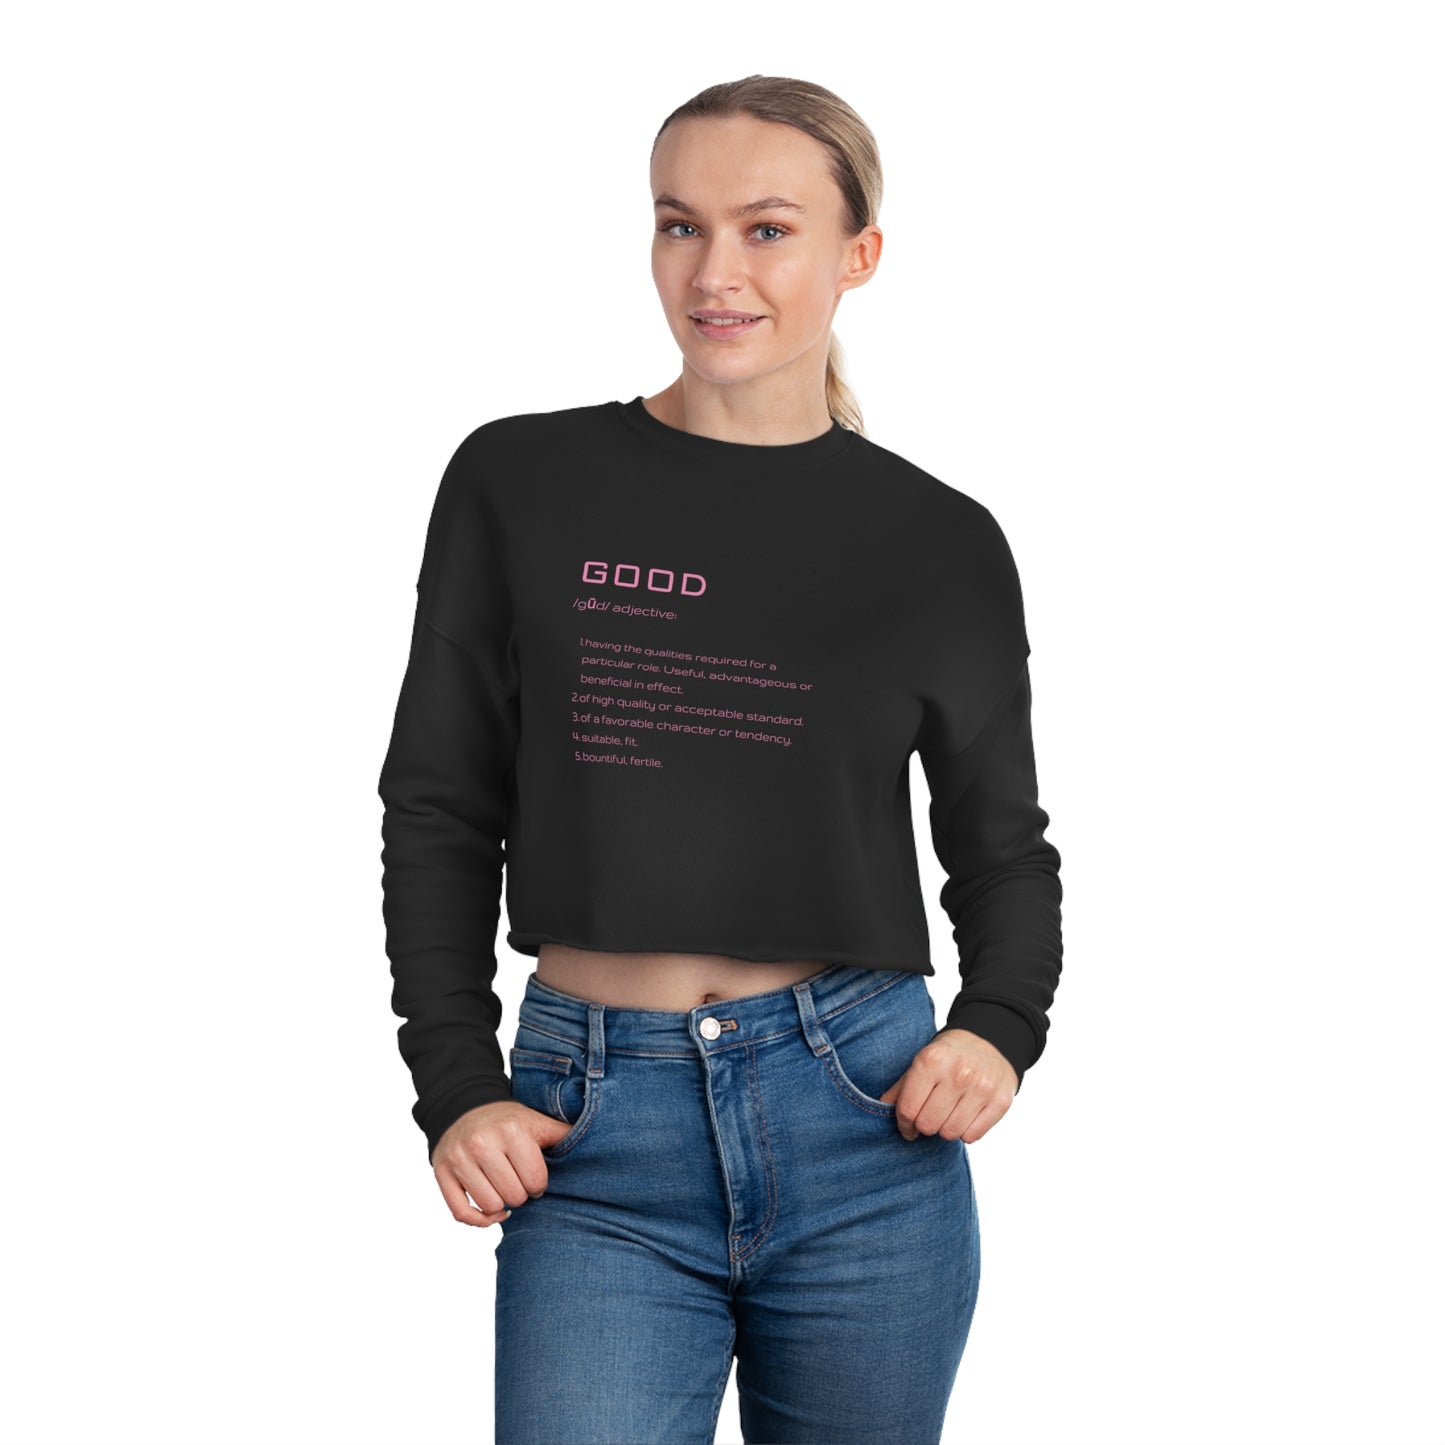 GOOD Defined Women's Cropped Sweatshirt | Good Definition Sweatshirt